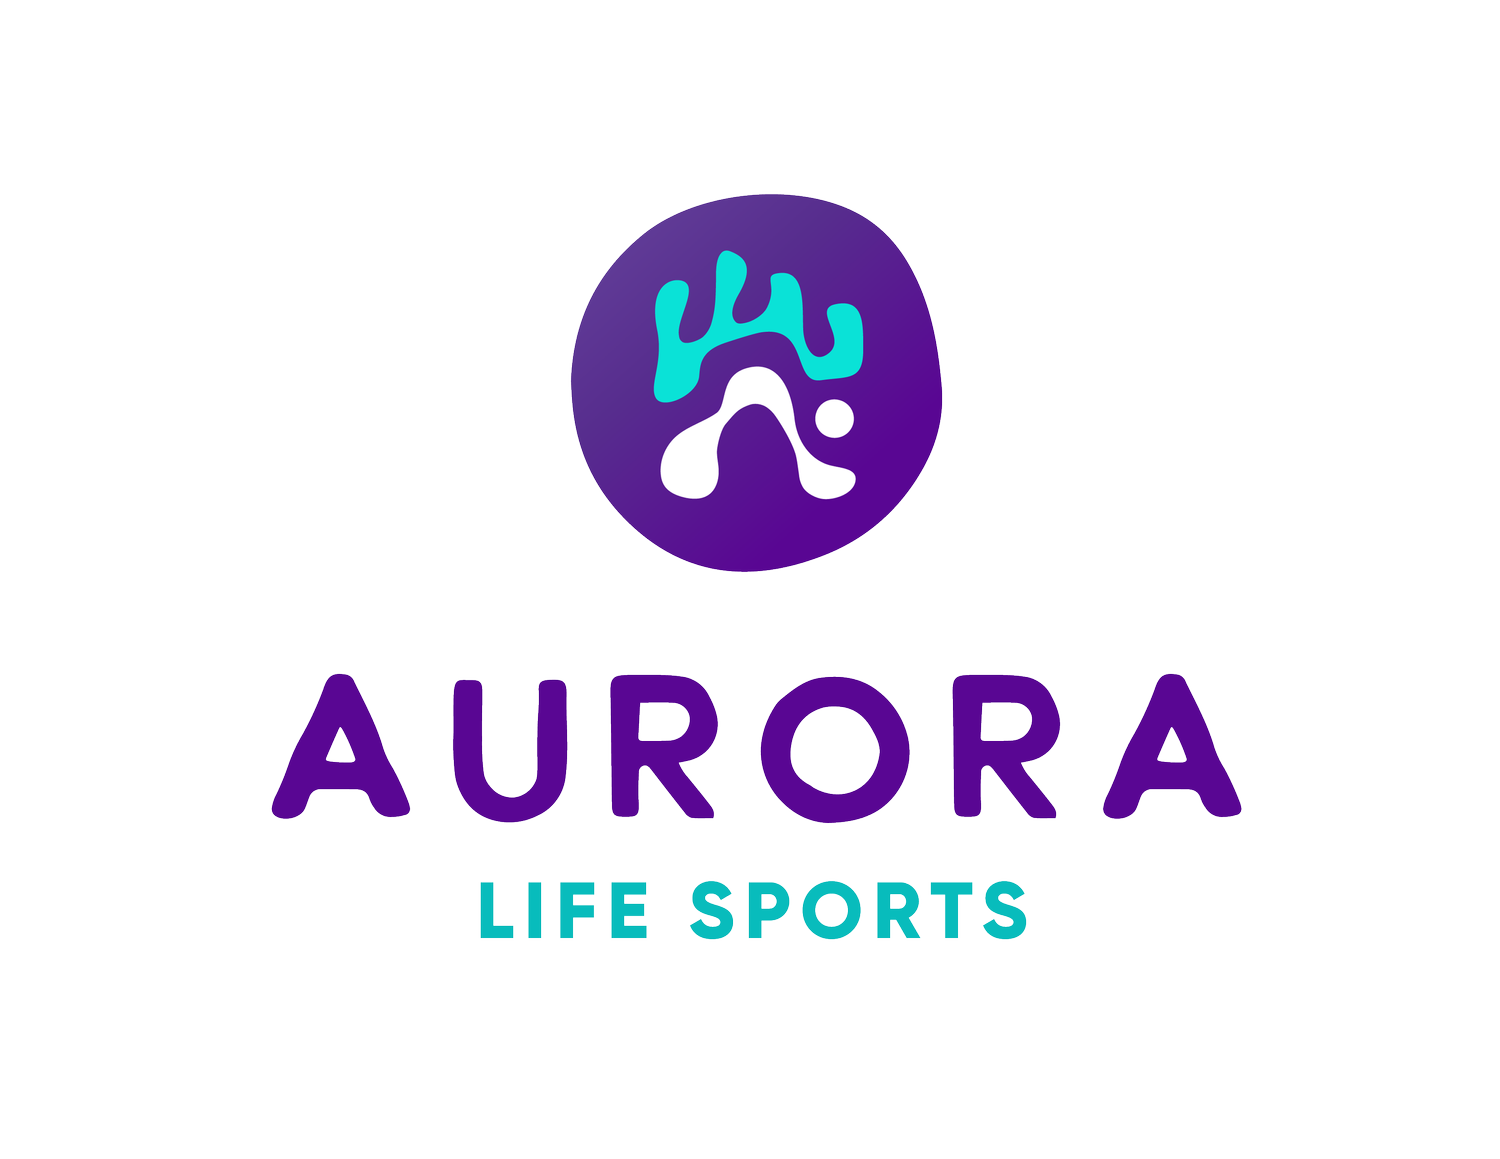 Aurora Life Sports Inc.: Hatha, Yin, Vinyasa, and Partner Yoga classes, workshops and events